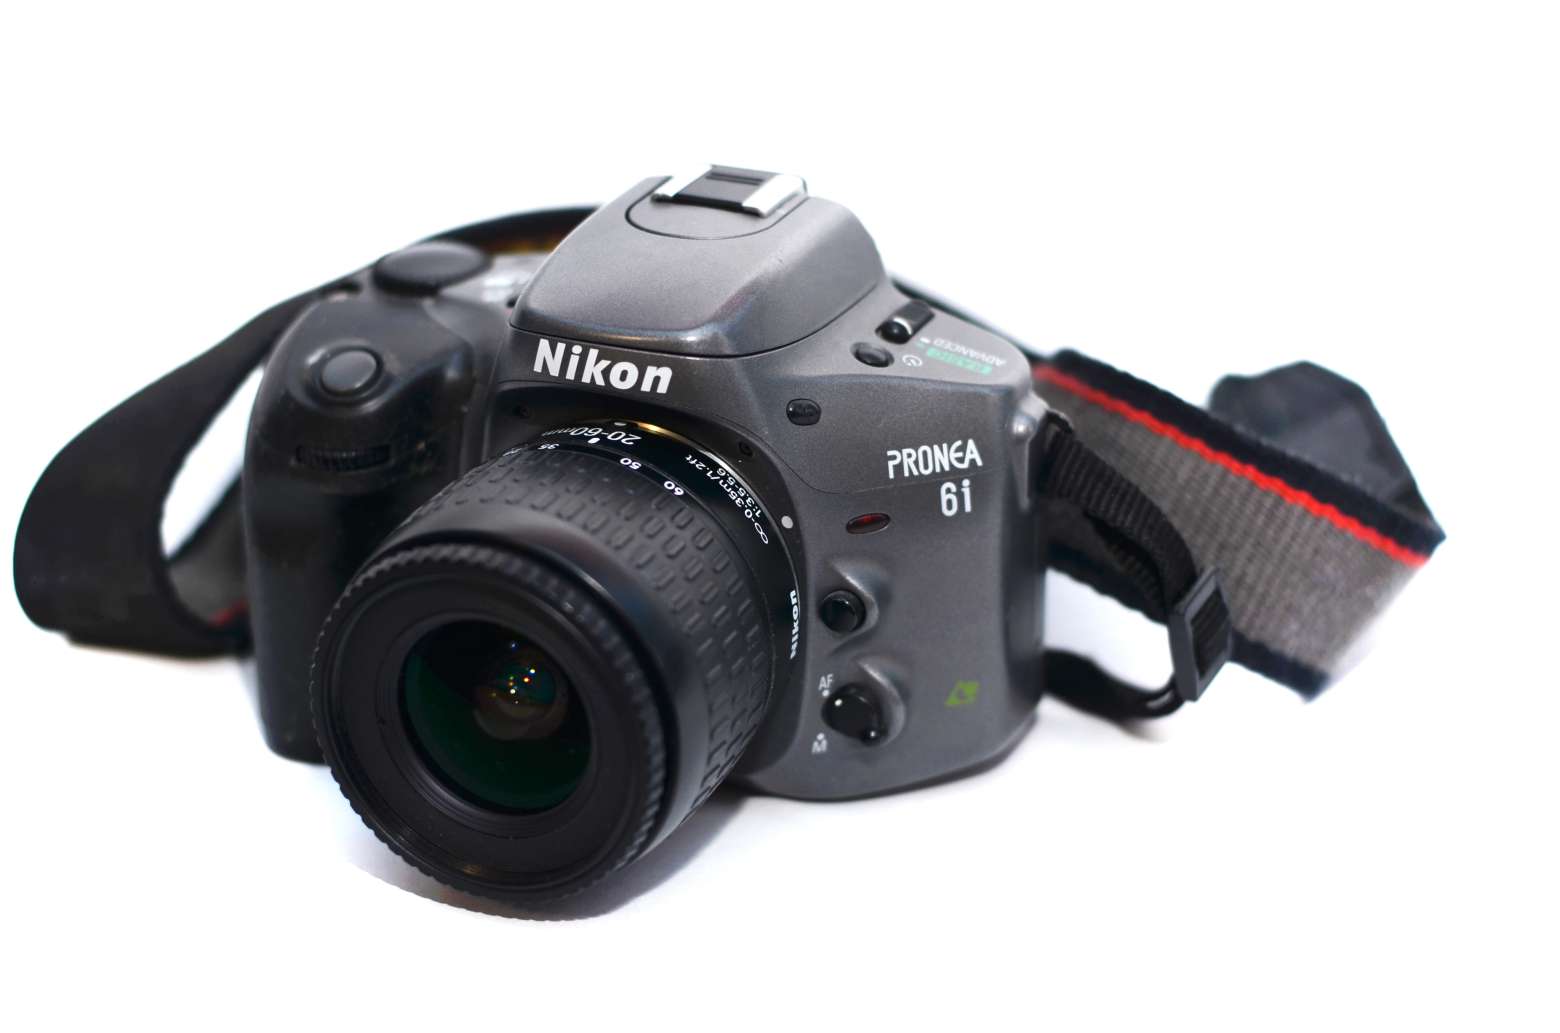 Photo of Nikon Pronea 600i